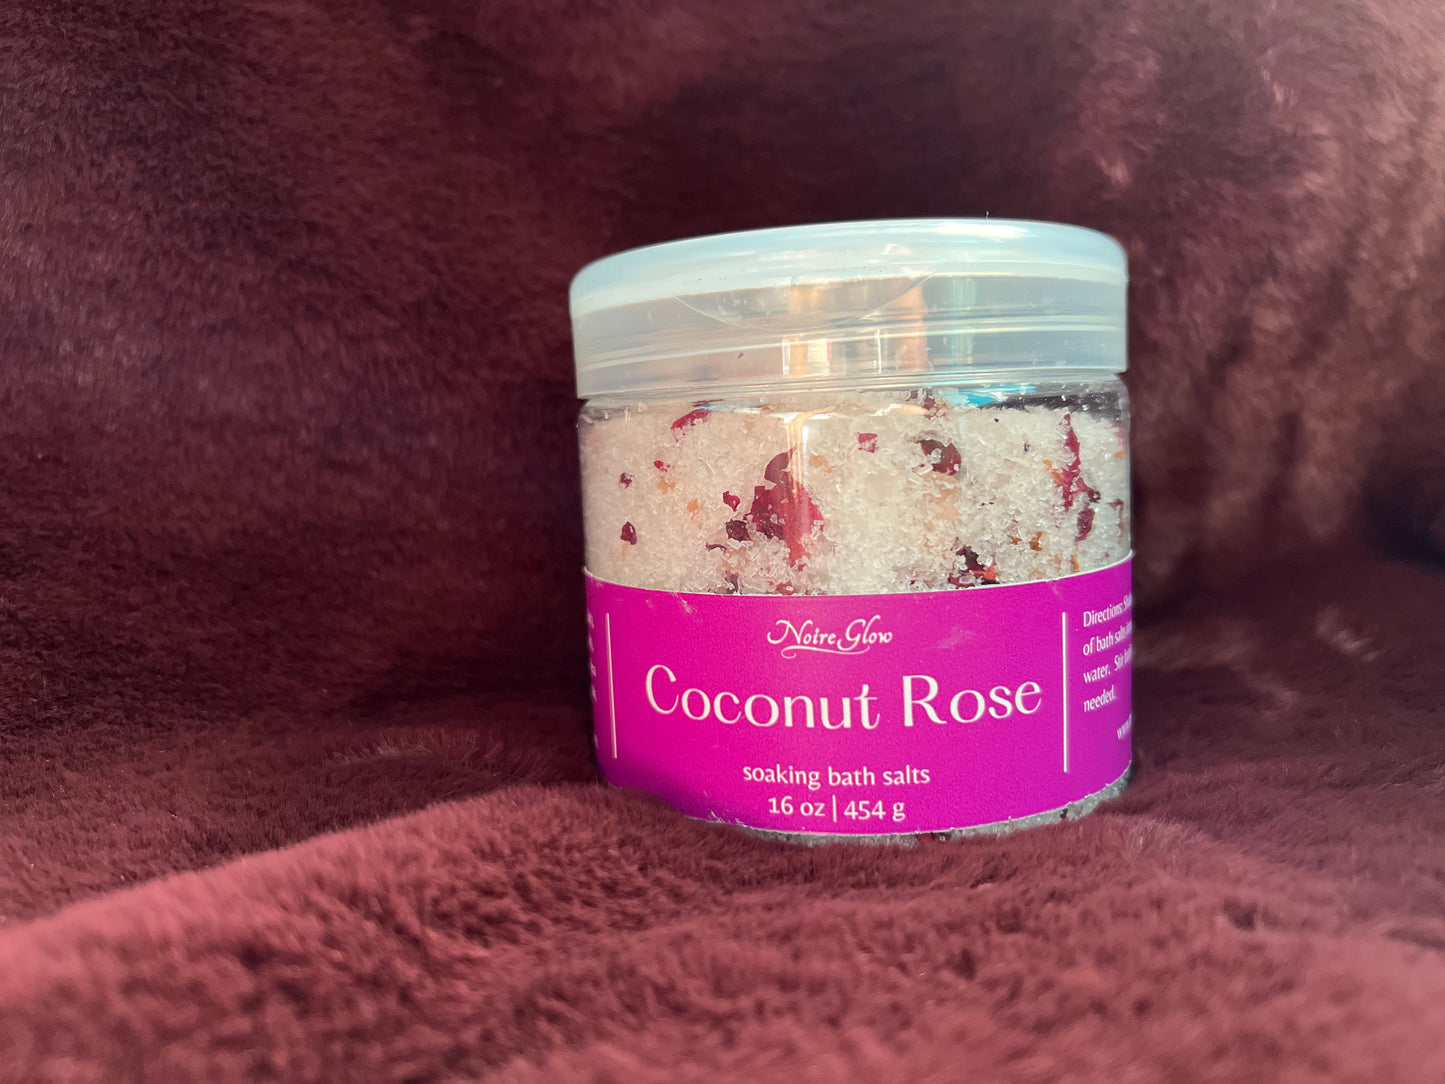 Coconut Rose Soaking Bath Salts